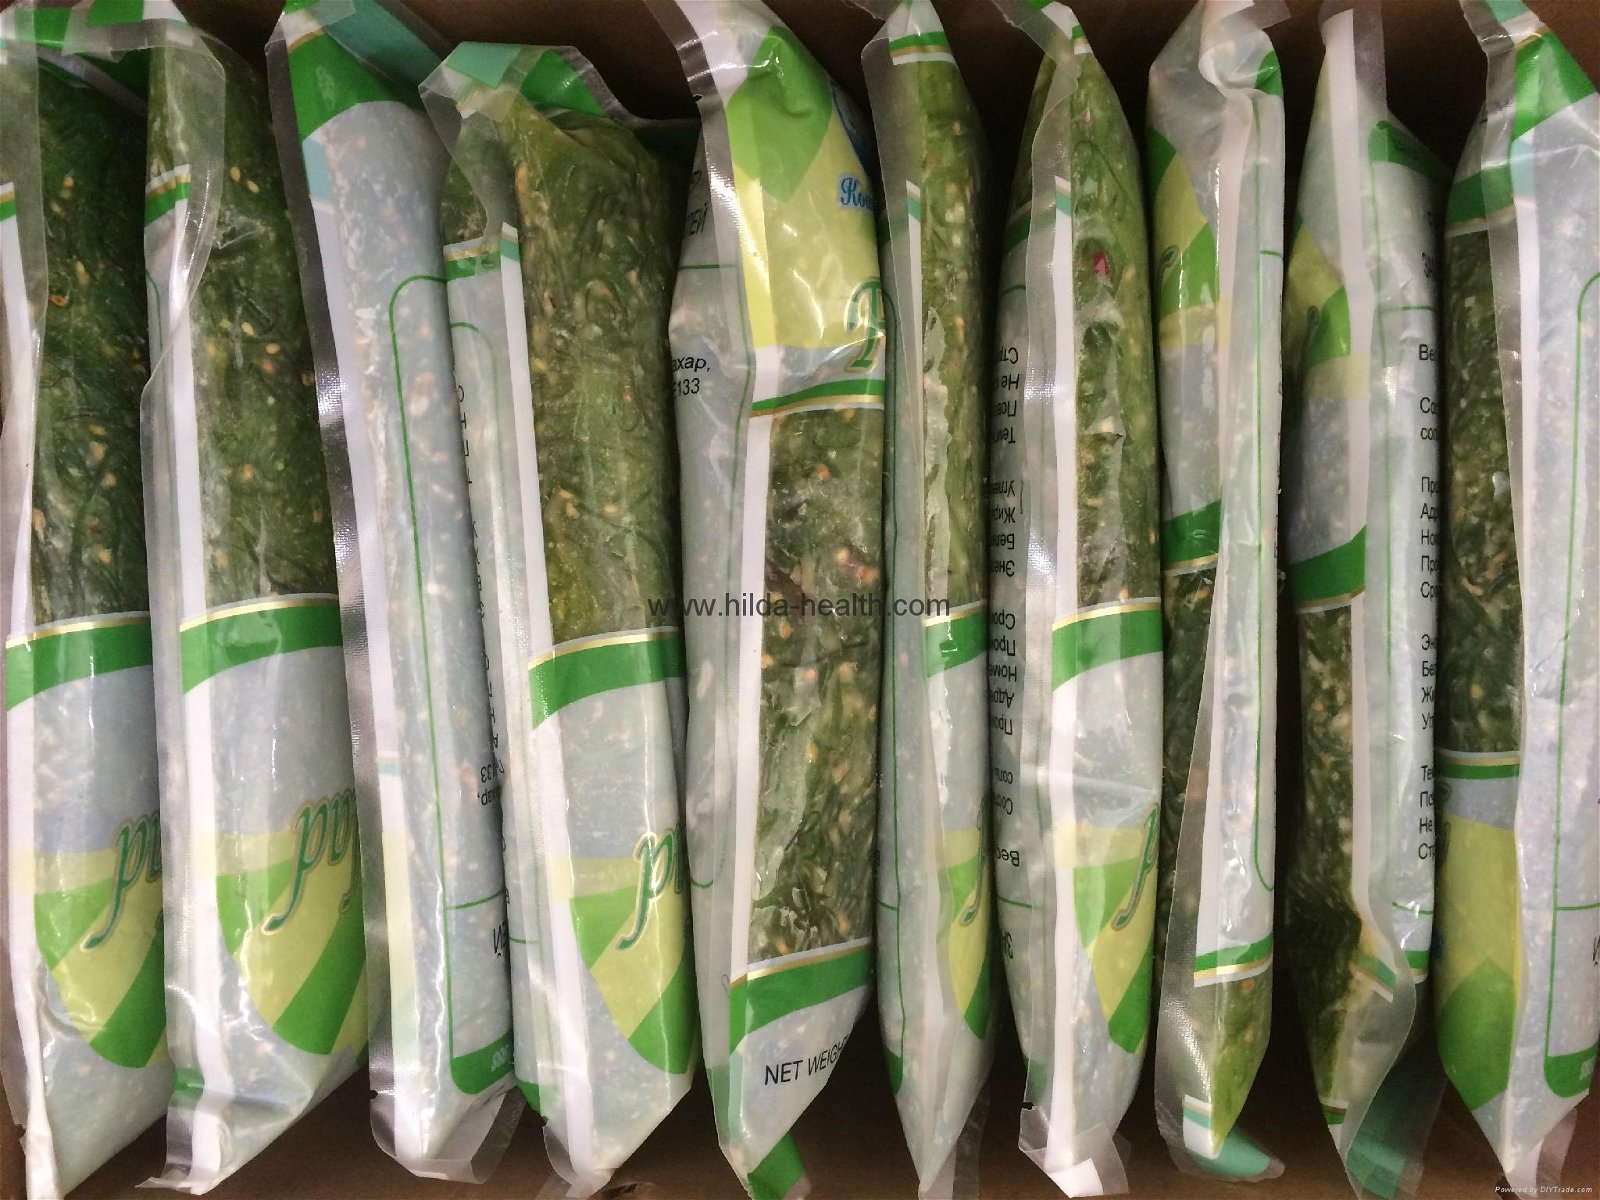 Frozen shredded seaweed wamake stem chuka salad 1kg bag